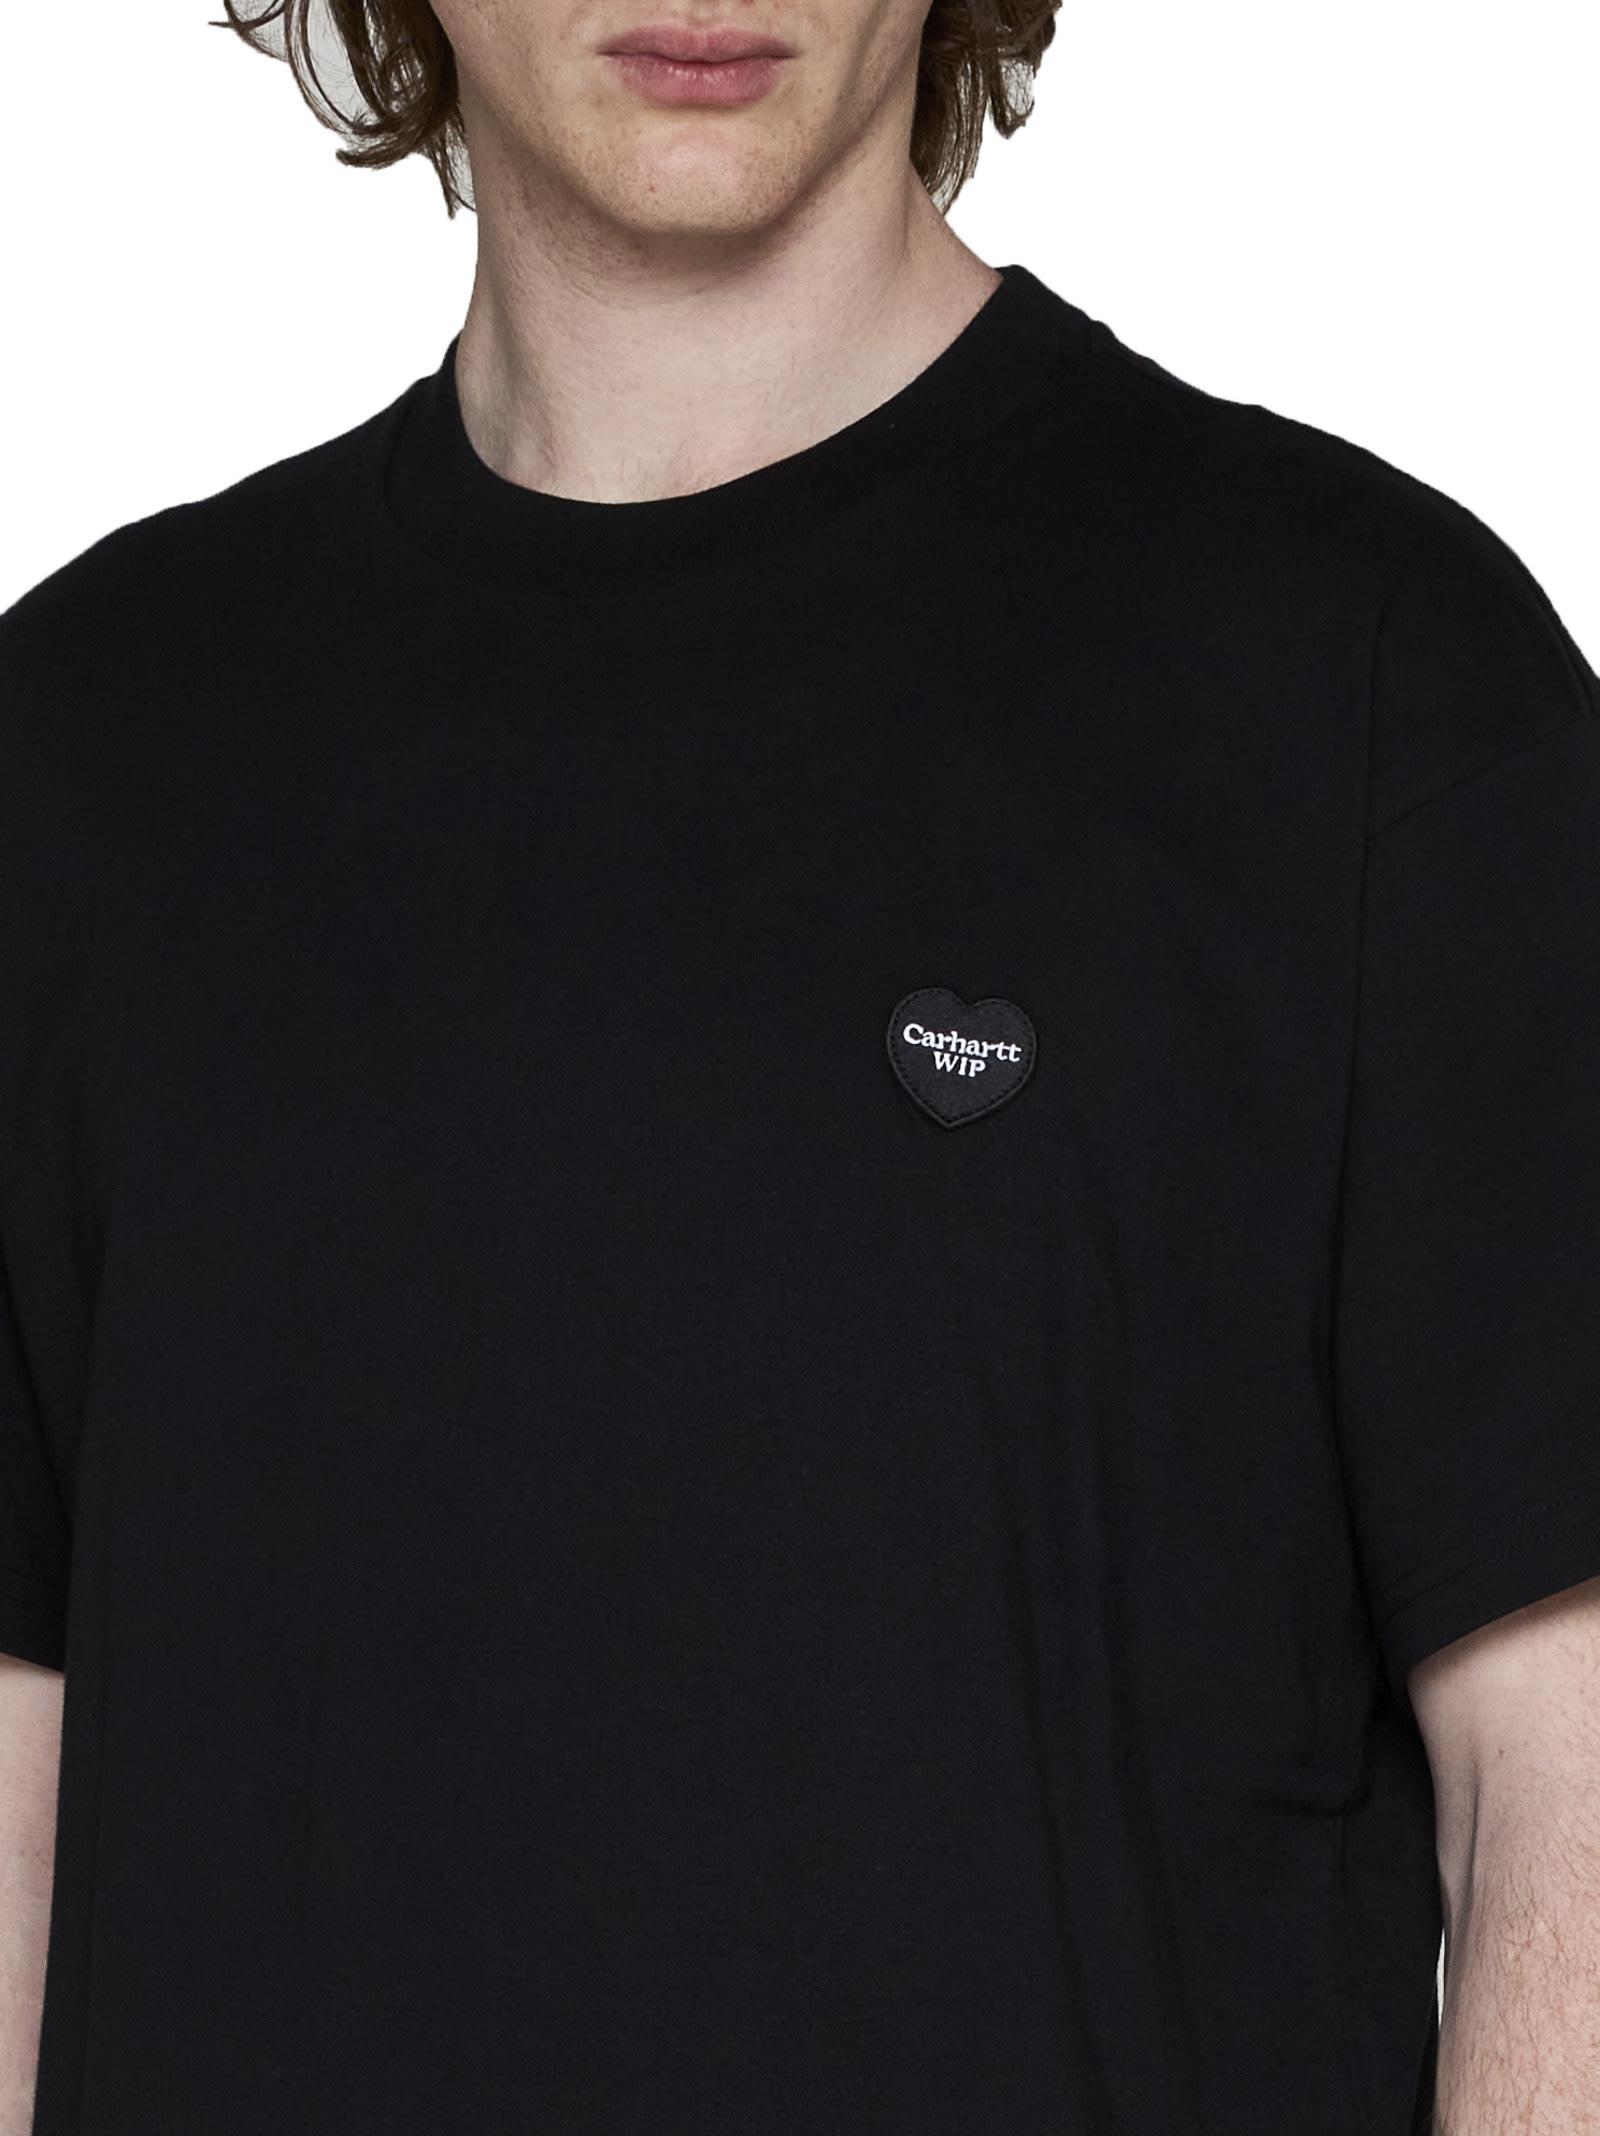 Carhartt WIP Double Lyst Men | Heart for Cotton T-shirt Black in Logo